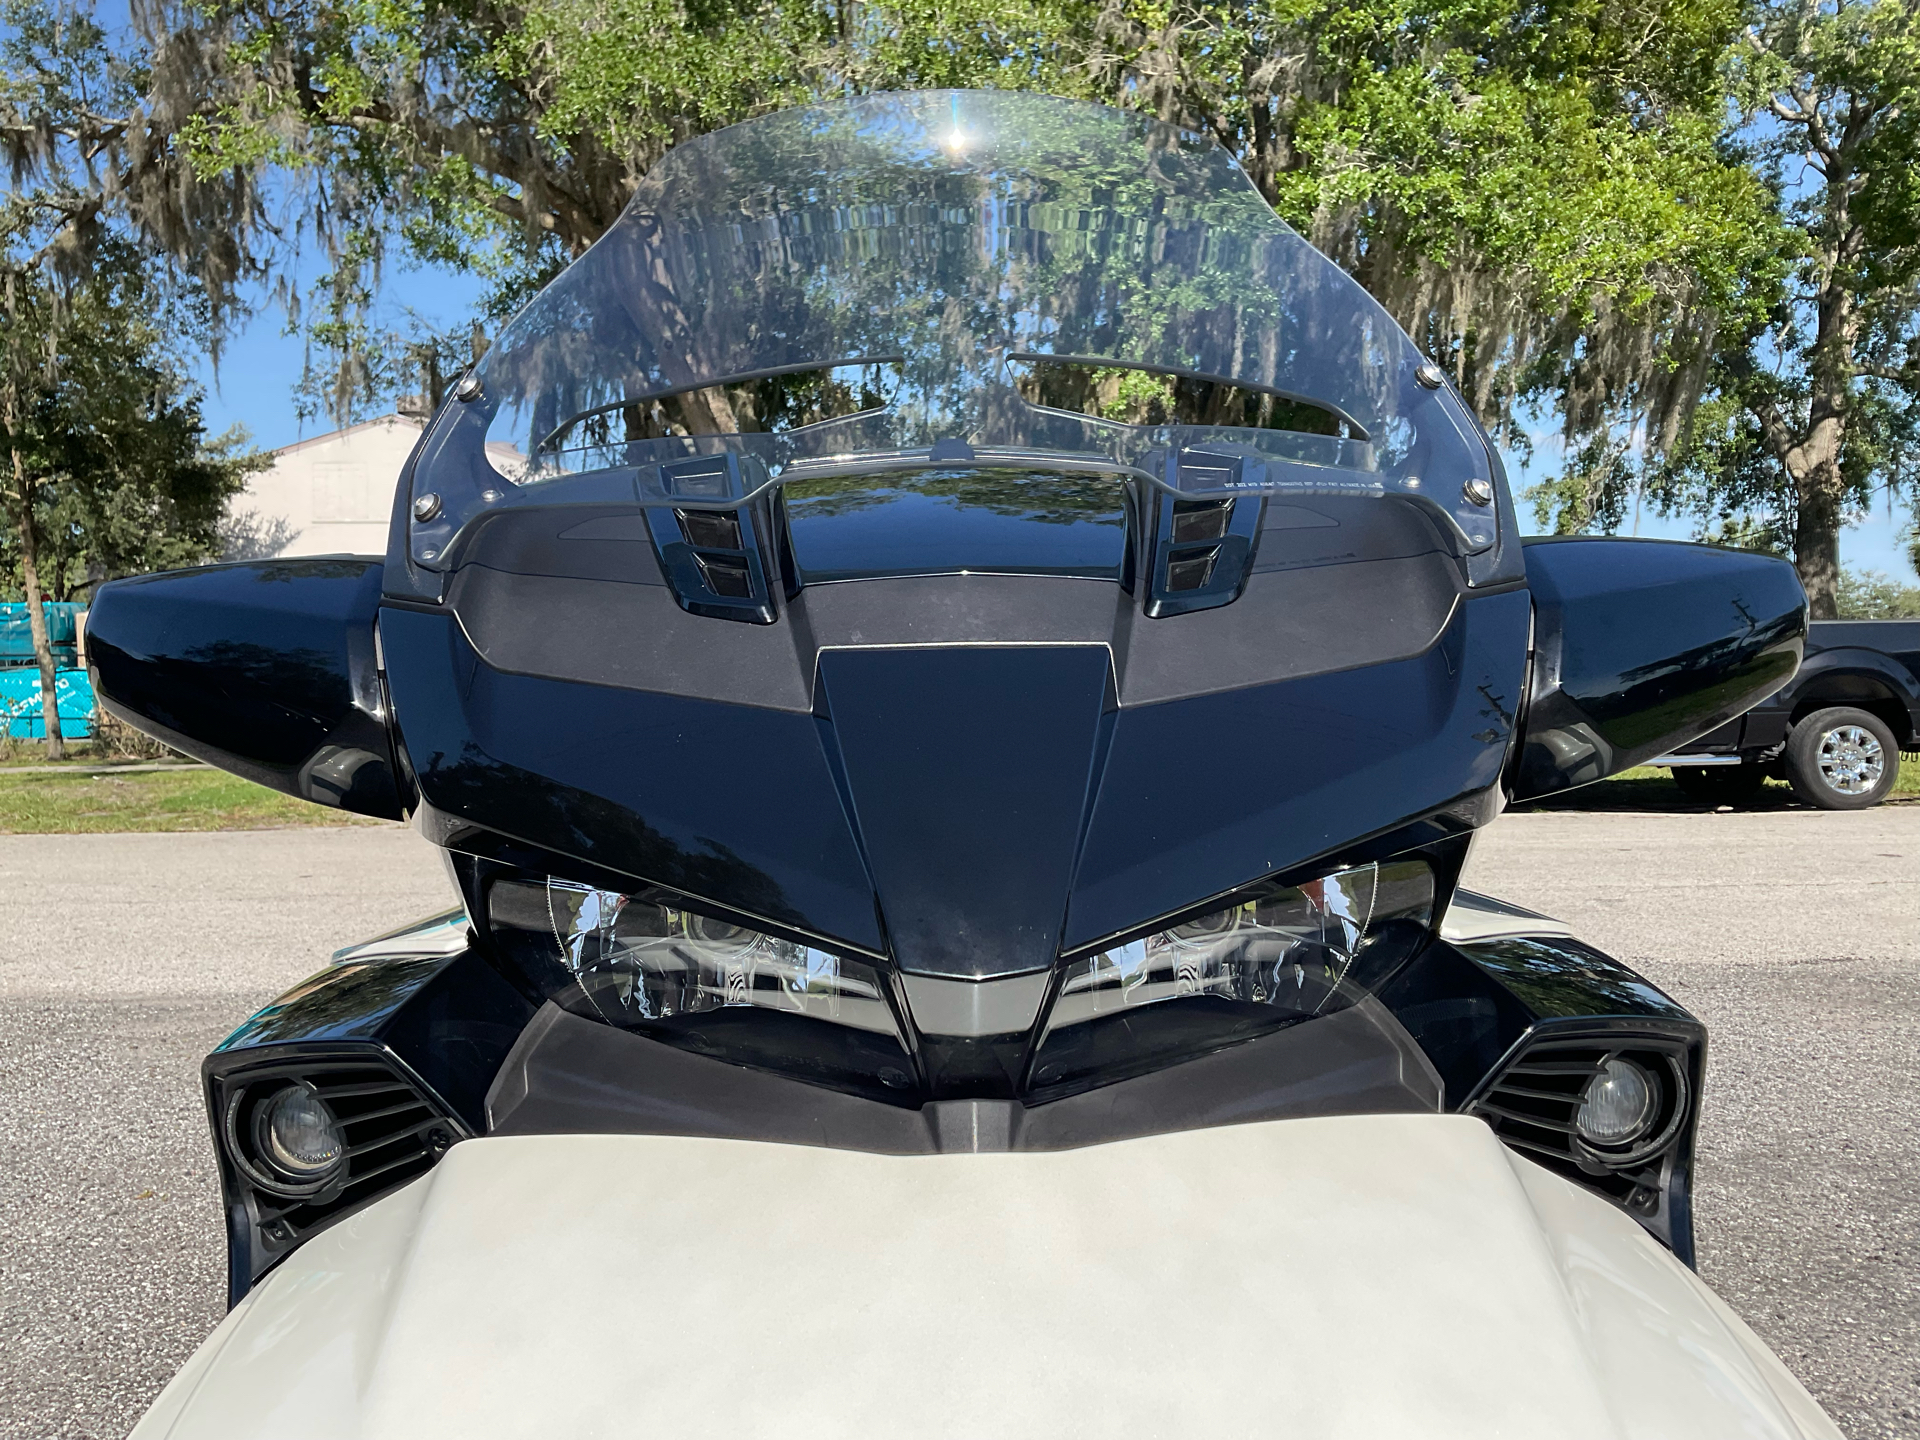 2021 Can-Am Spyder F3-T in Sanford, Florida - Photo 17